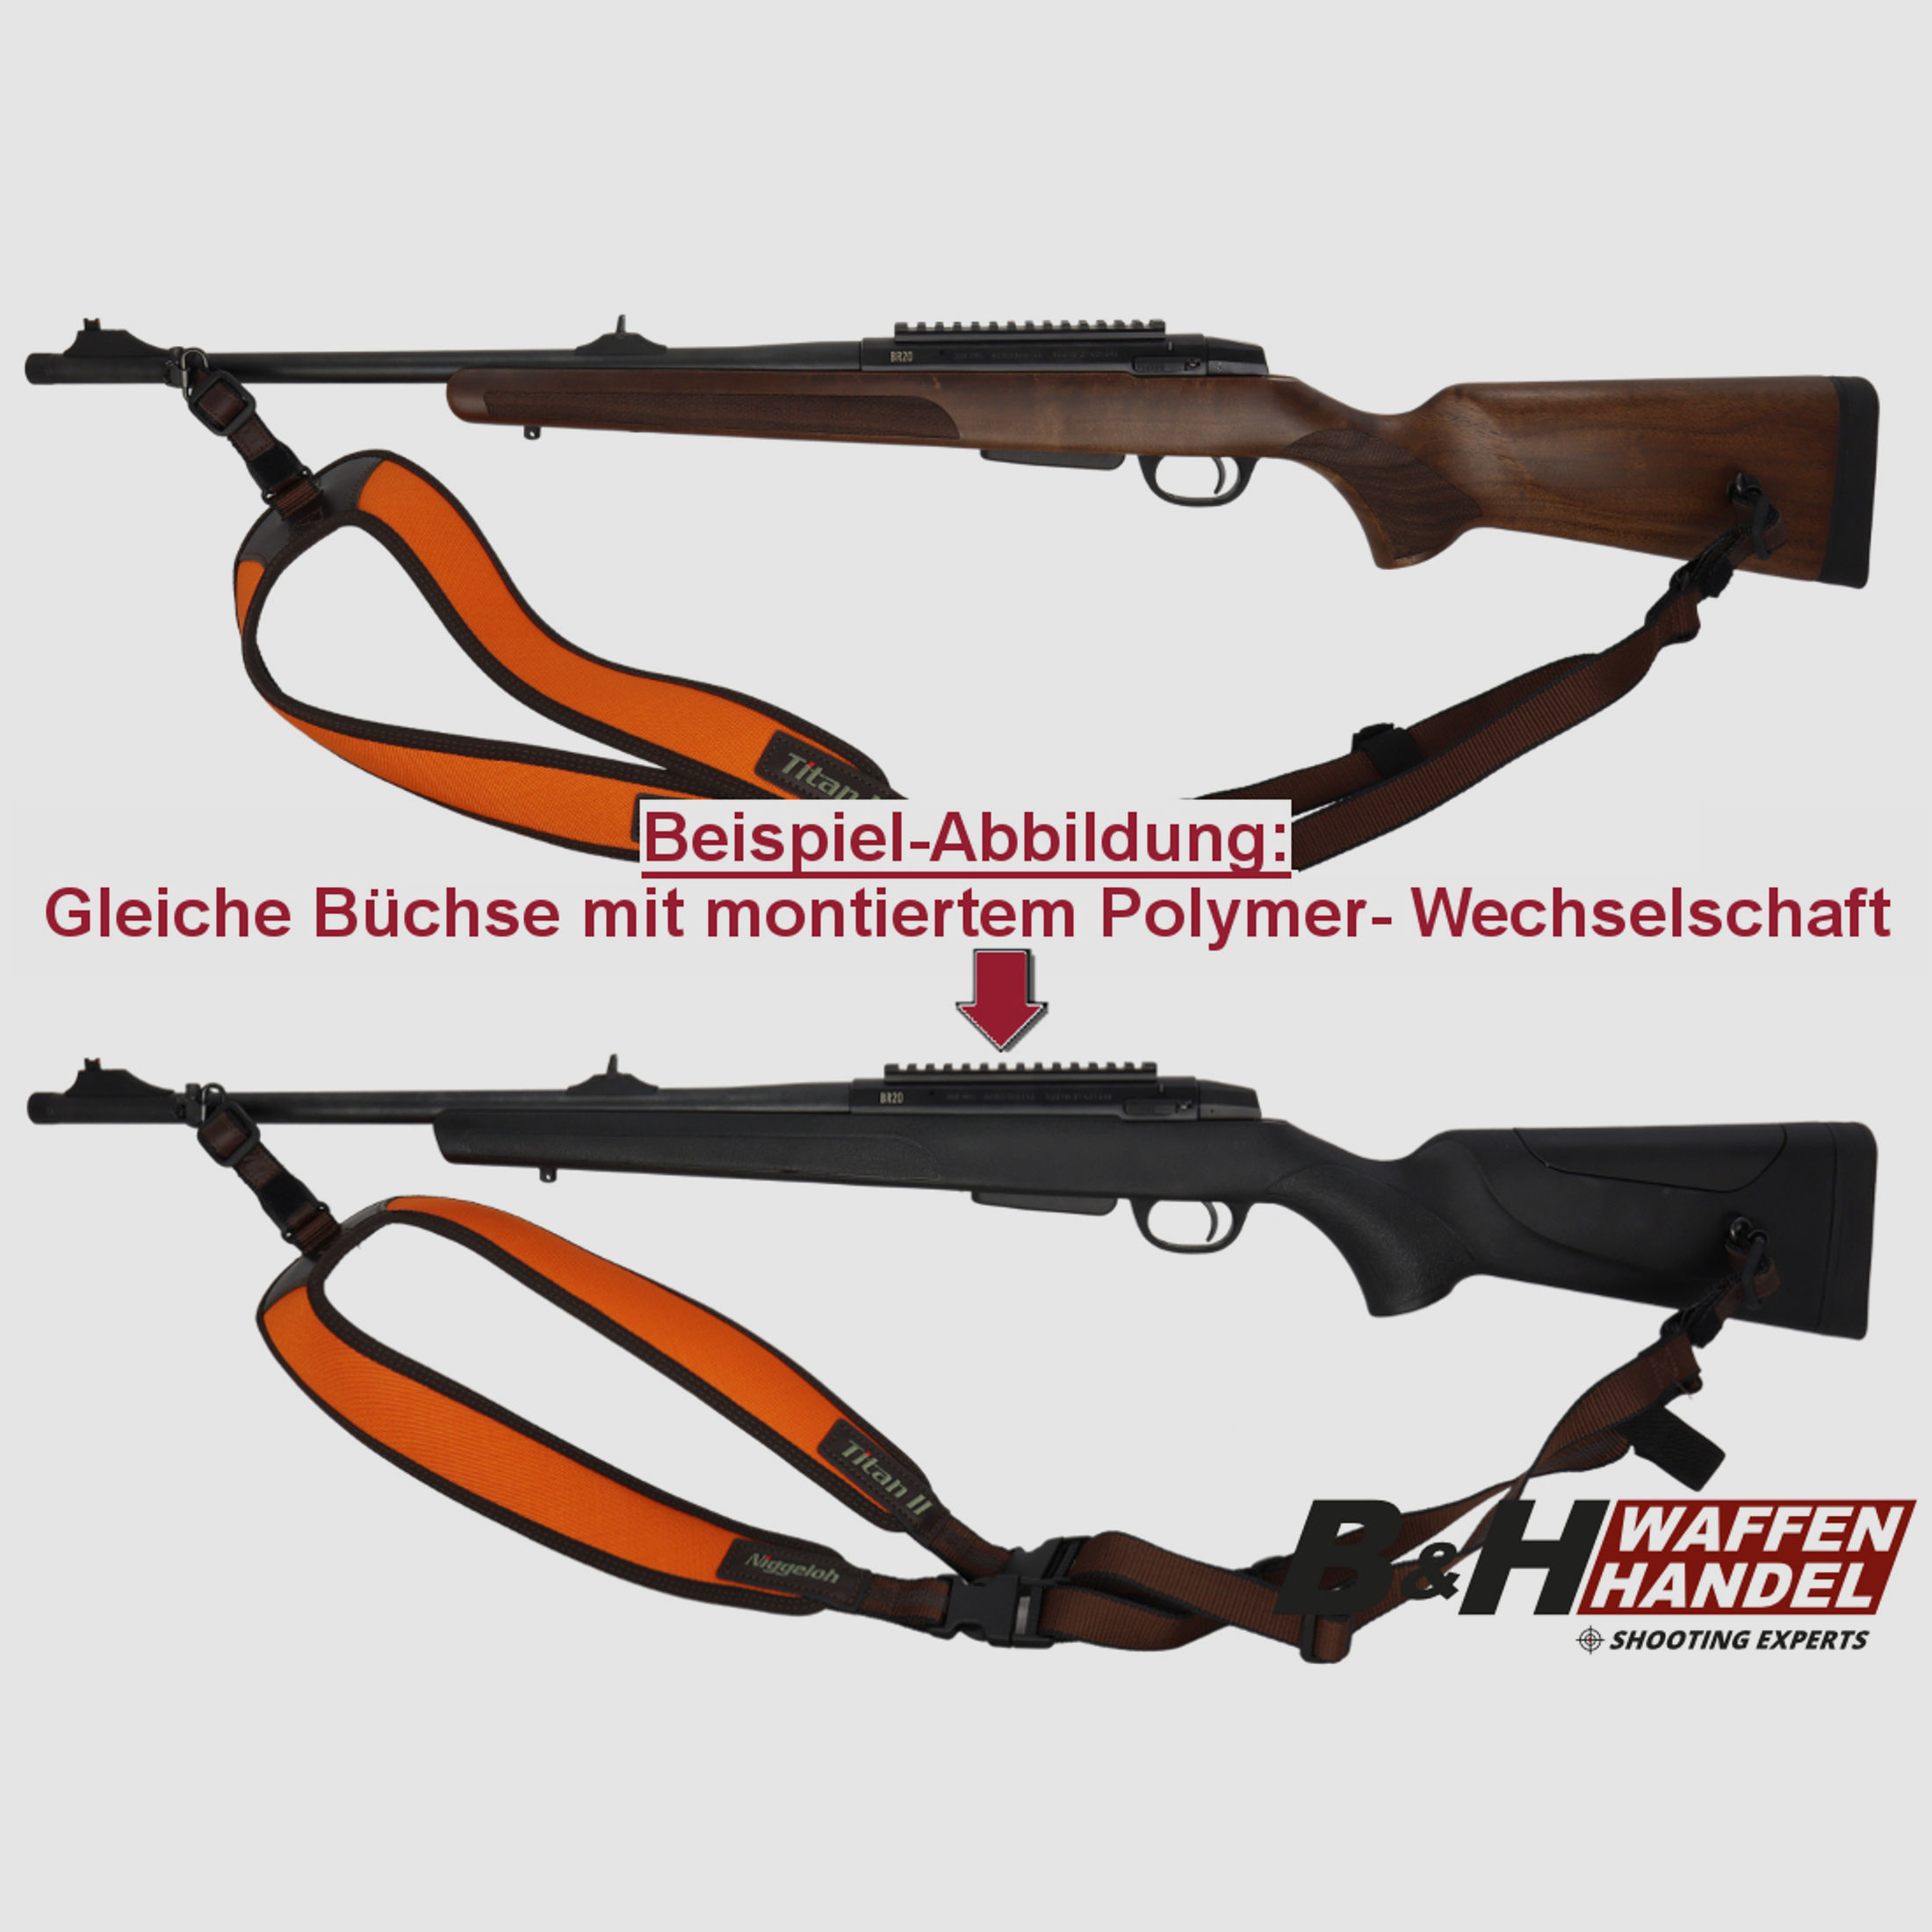 BR20 B&H DGS Komplettpaket Holzschaft + Polymerschaft Rucksack- Gewehrriemen Hundeführer Nachsuche Durchgehschützen